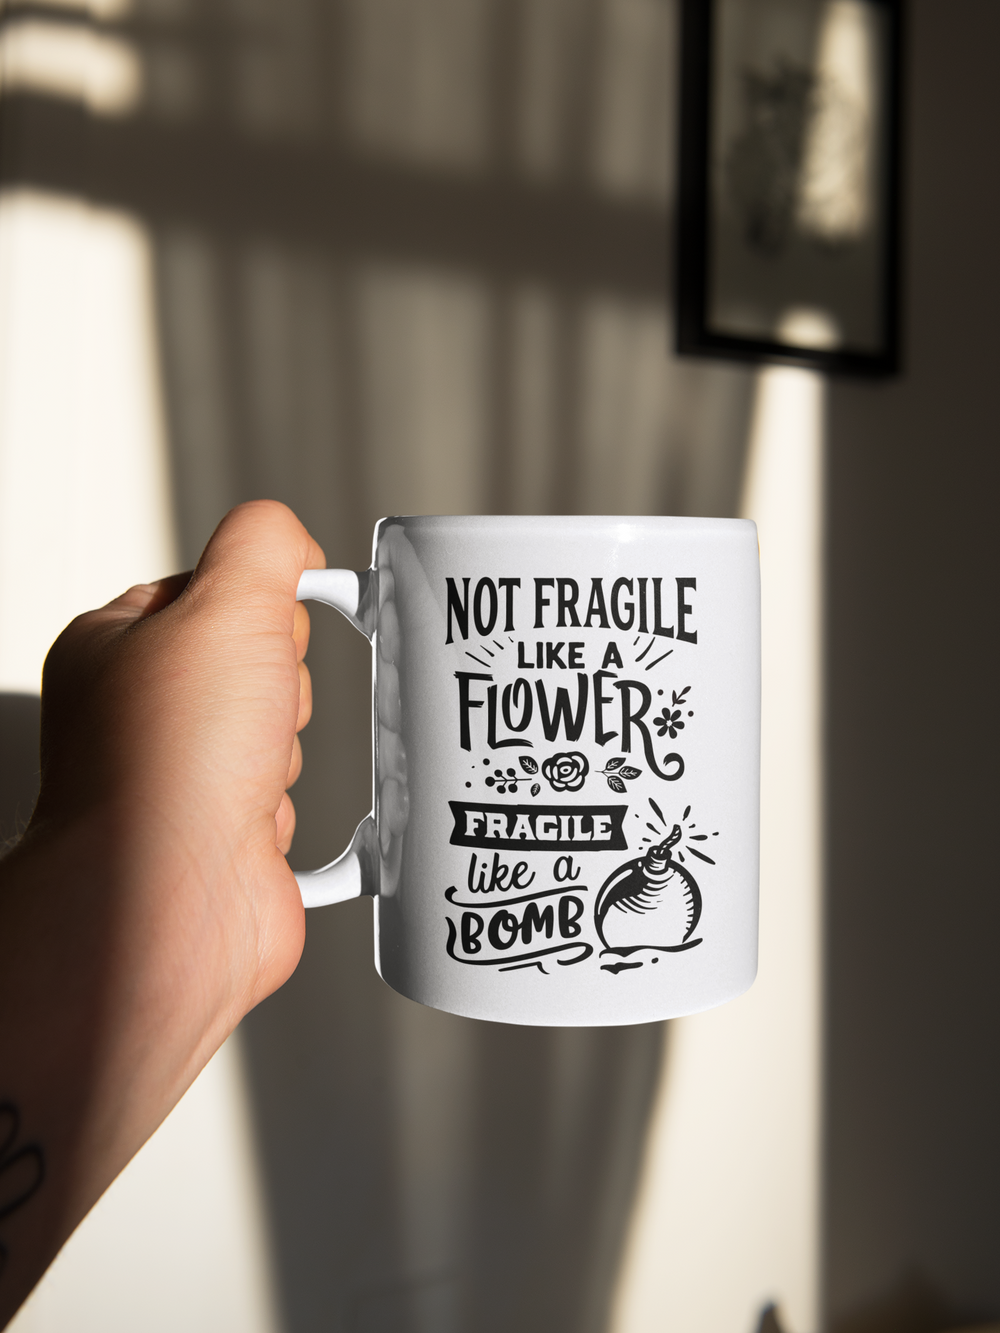 Fragile Like A Bomb Mug